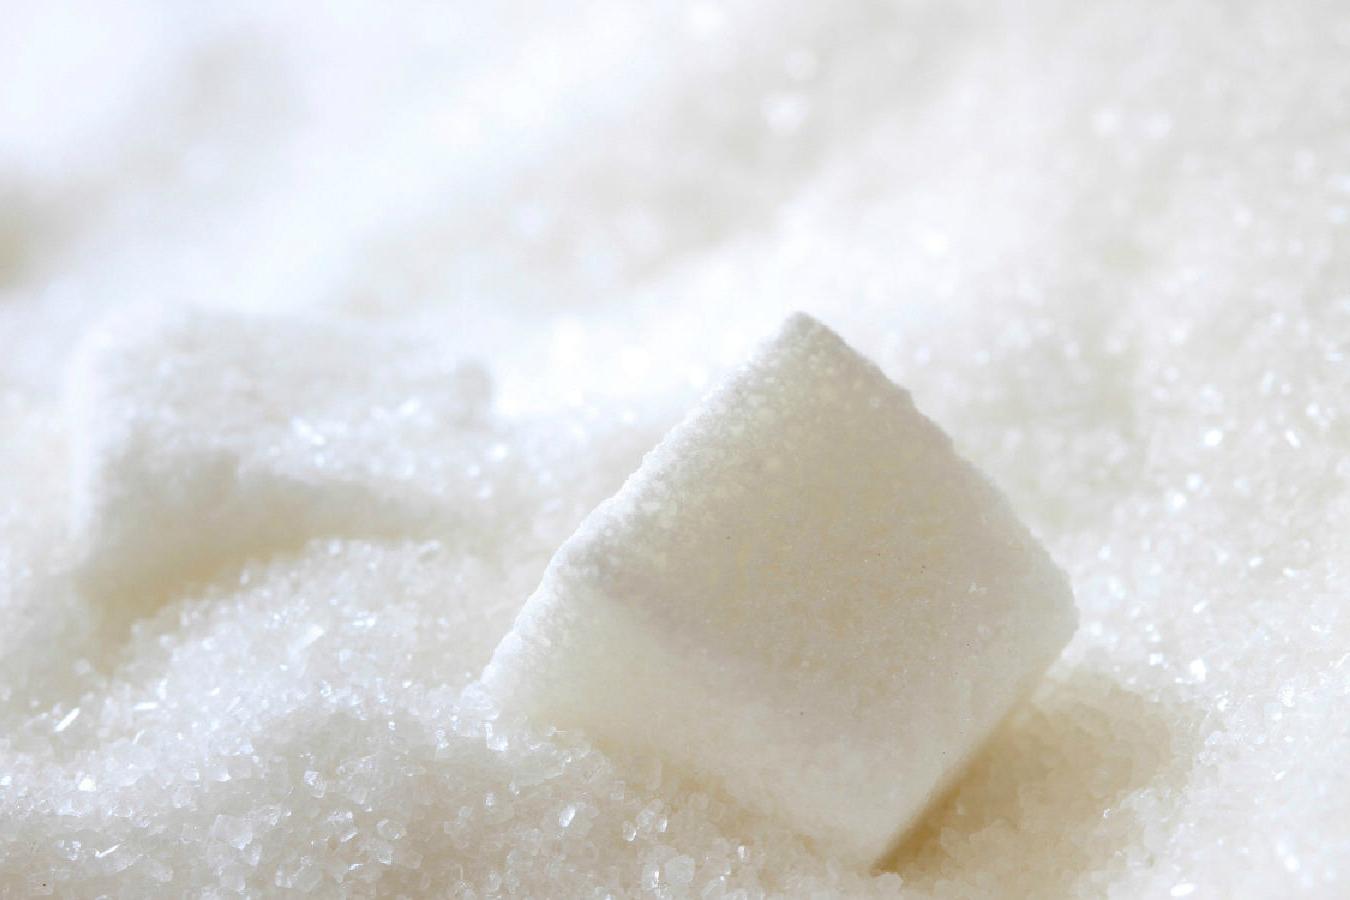 Україна збільшила експорт цукру у 33 рази